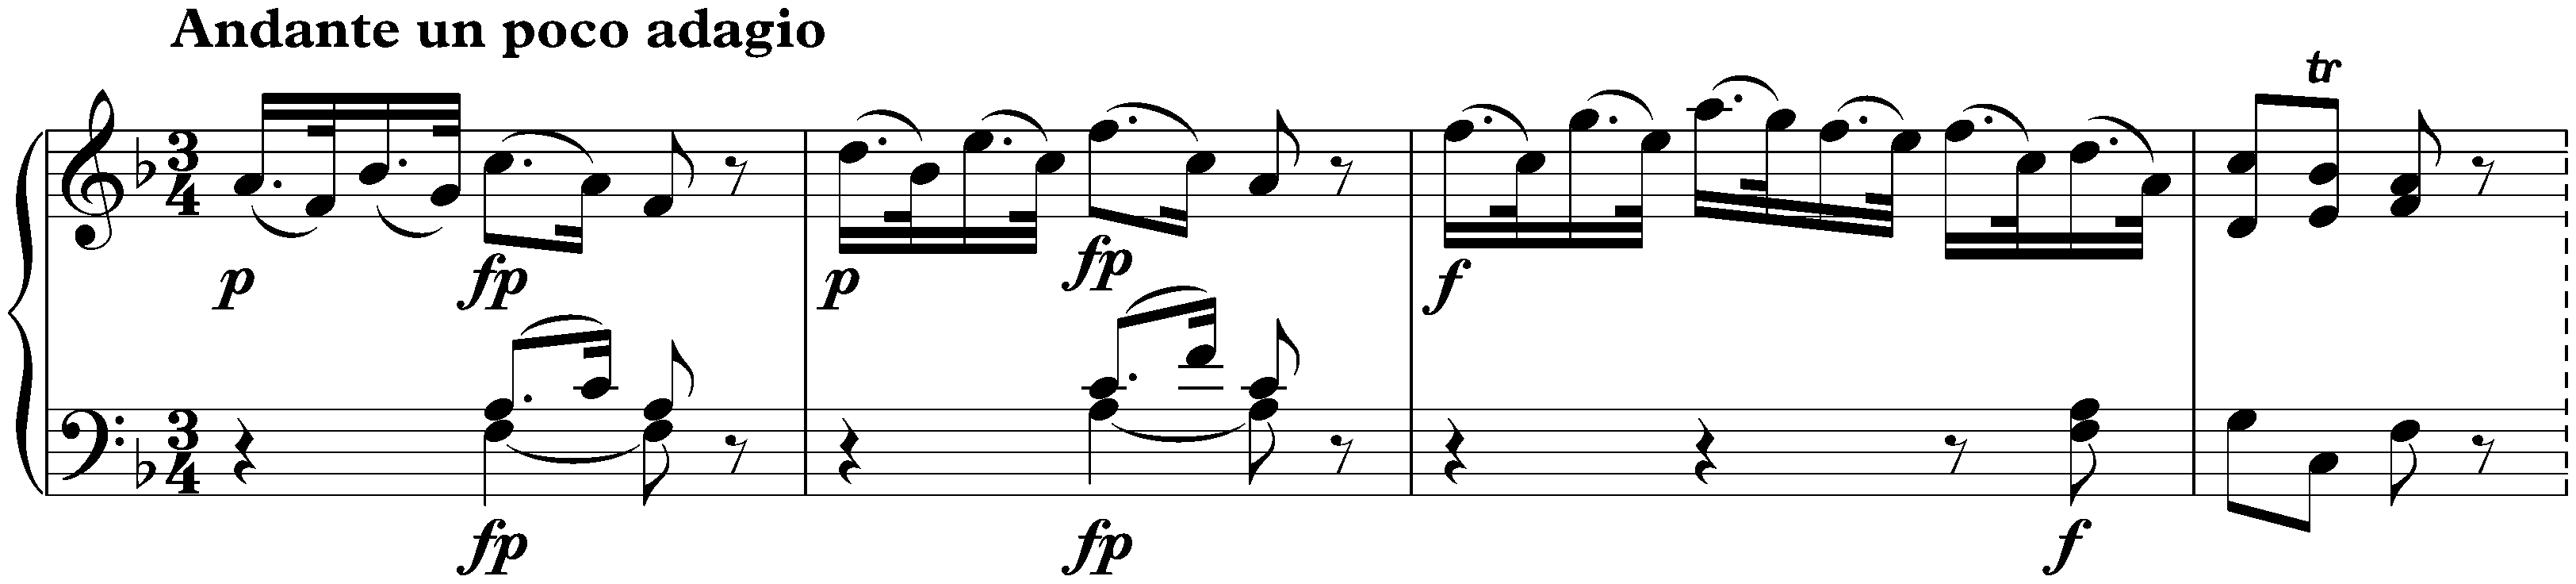 Sonata in C major, KV 309/284b; 2. Andante un poco adagio